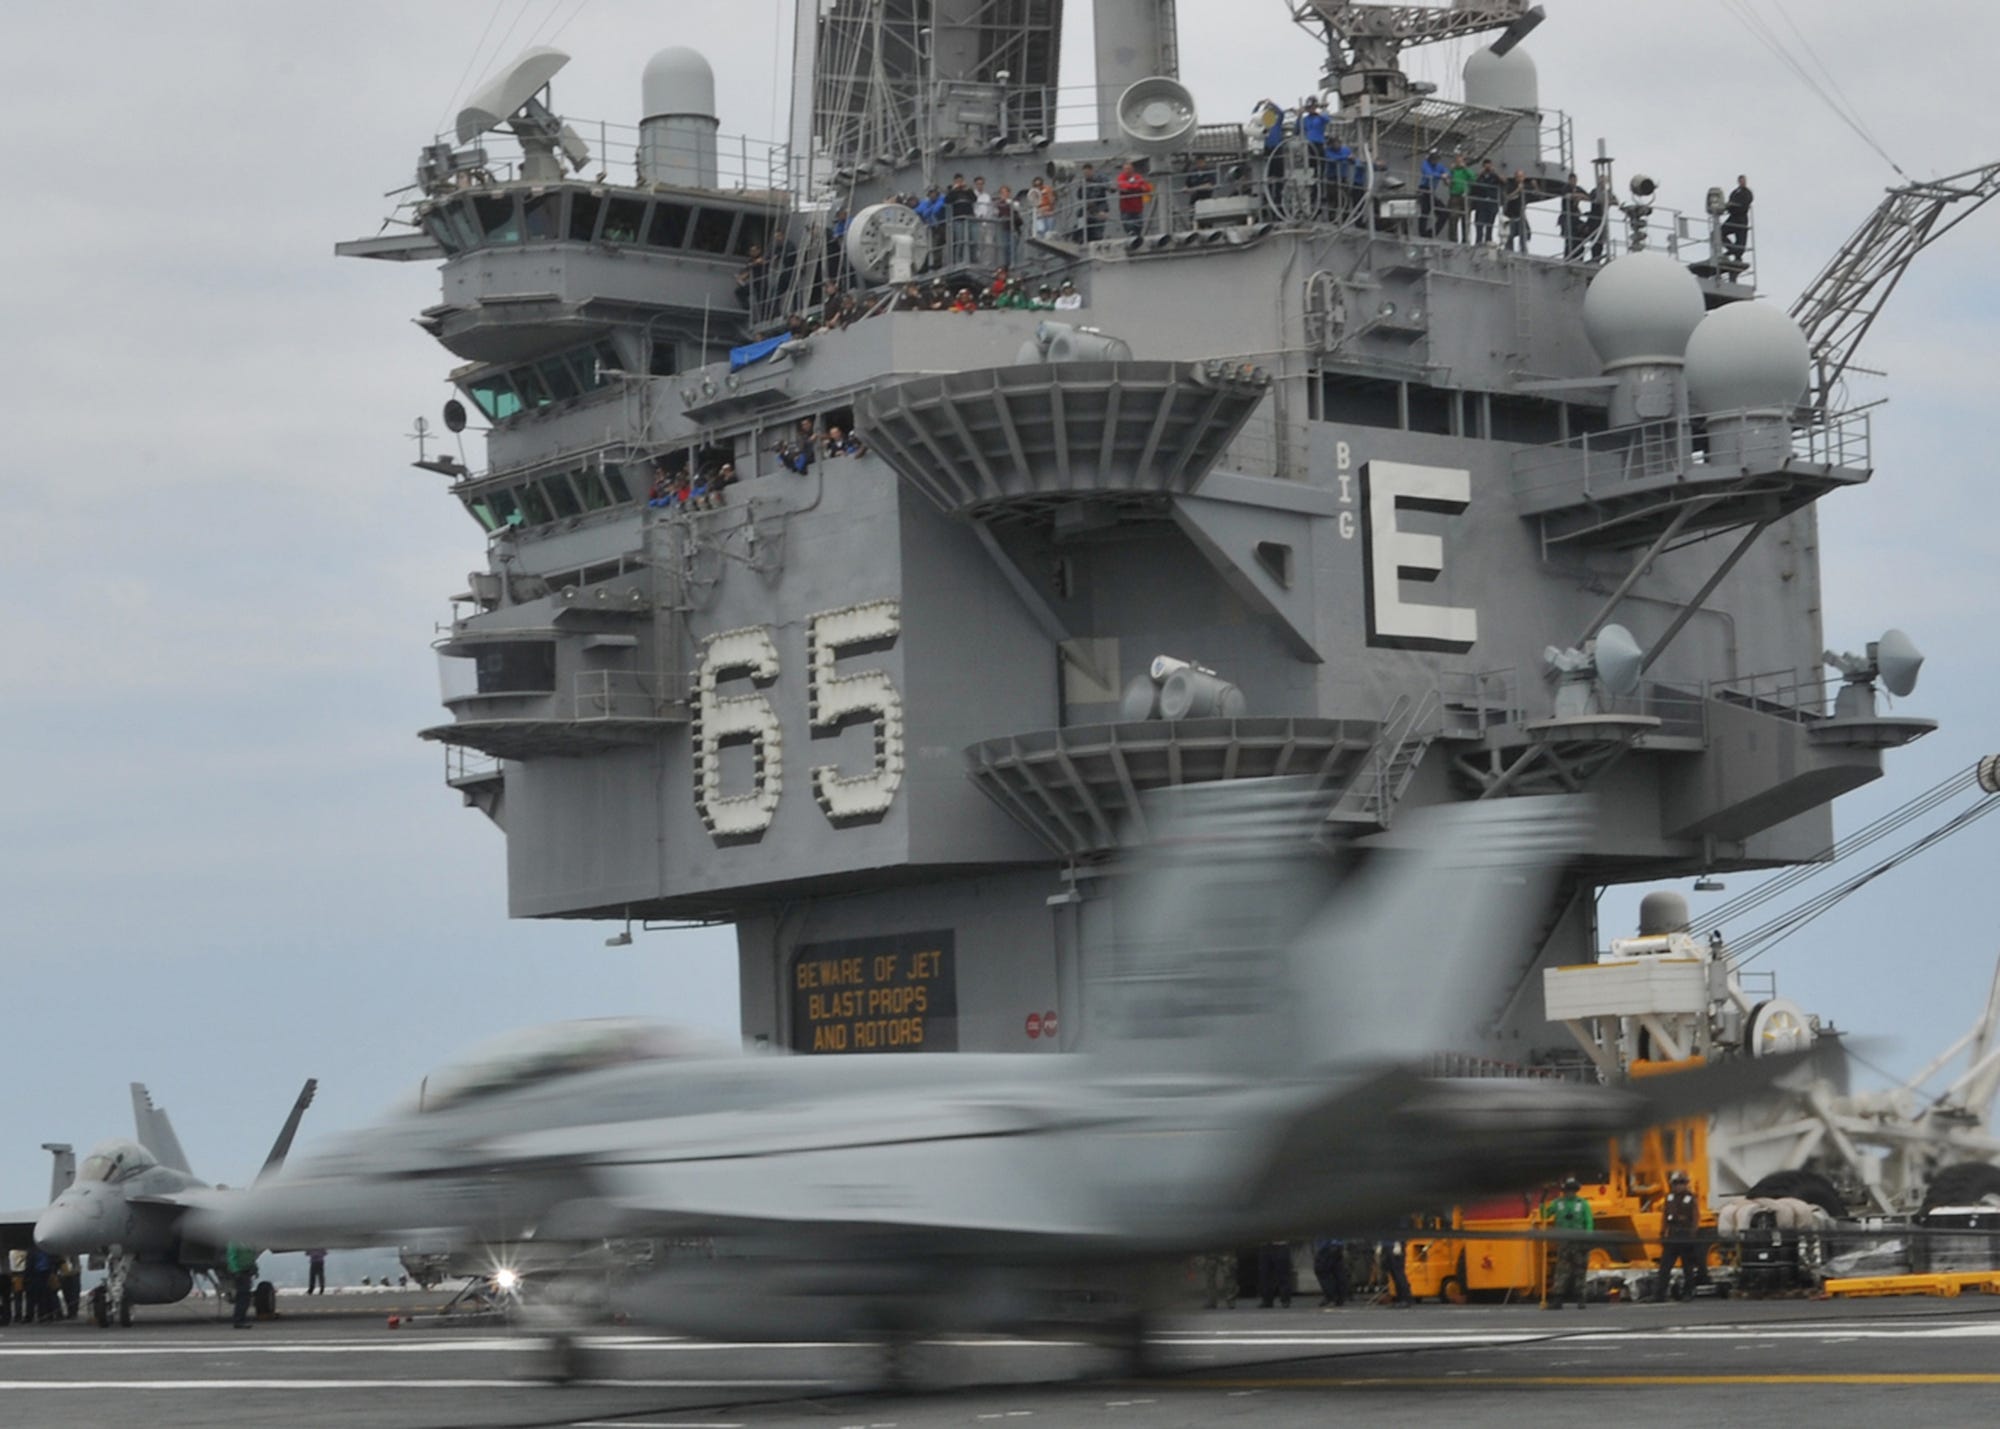 F/A-18F Super Hornet fighter jet lands on aircraft carrier Enterprise